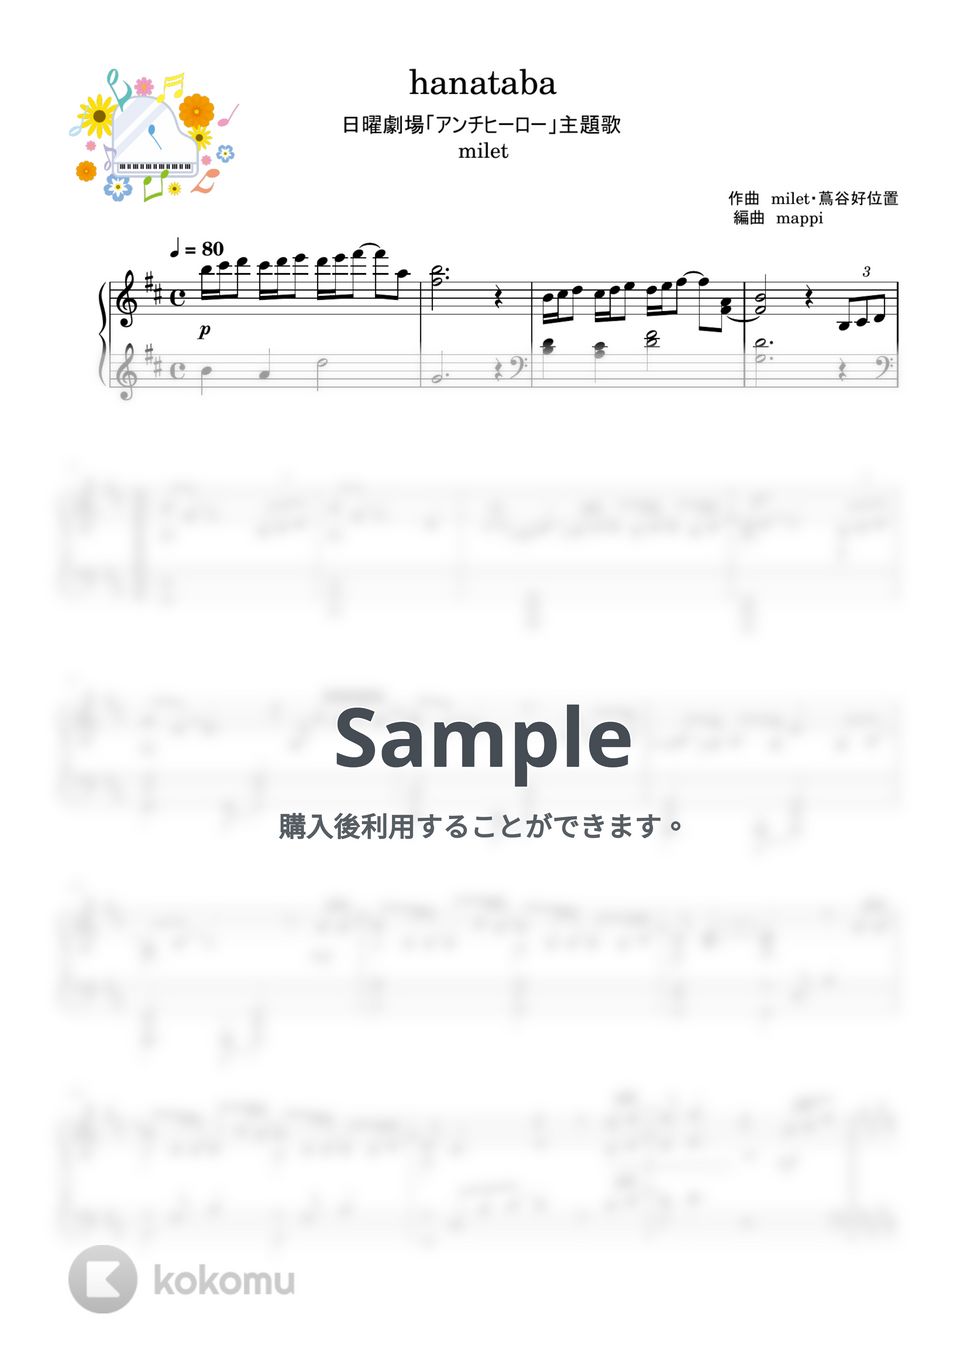 milet - hanataba (私にも弾ける/アンチヒーロー/シンプルアレンジ) by pup-mappi